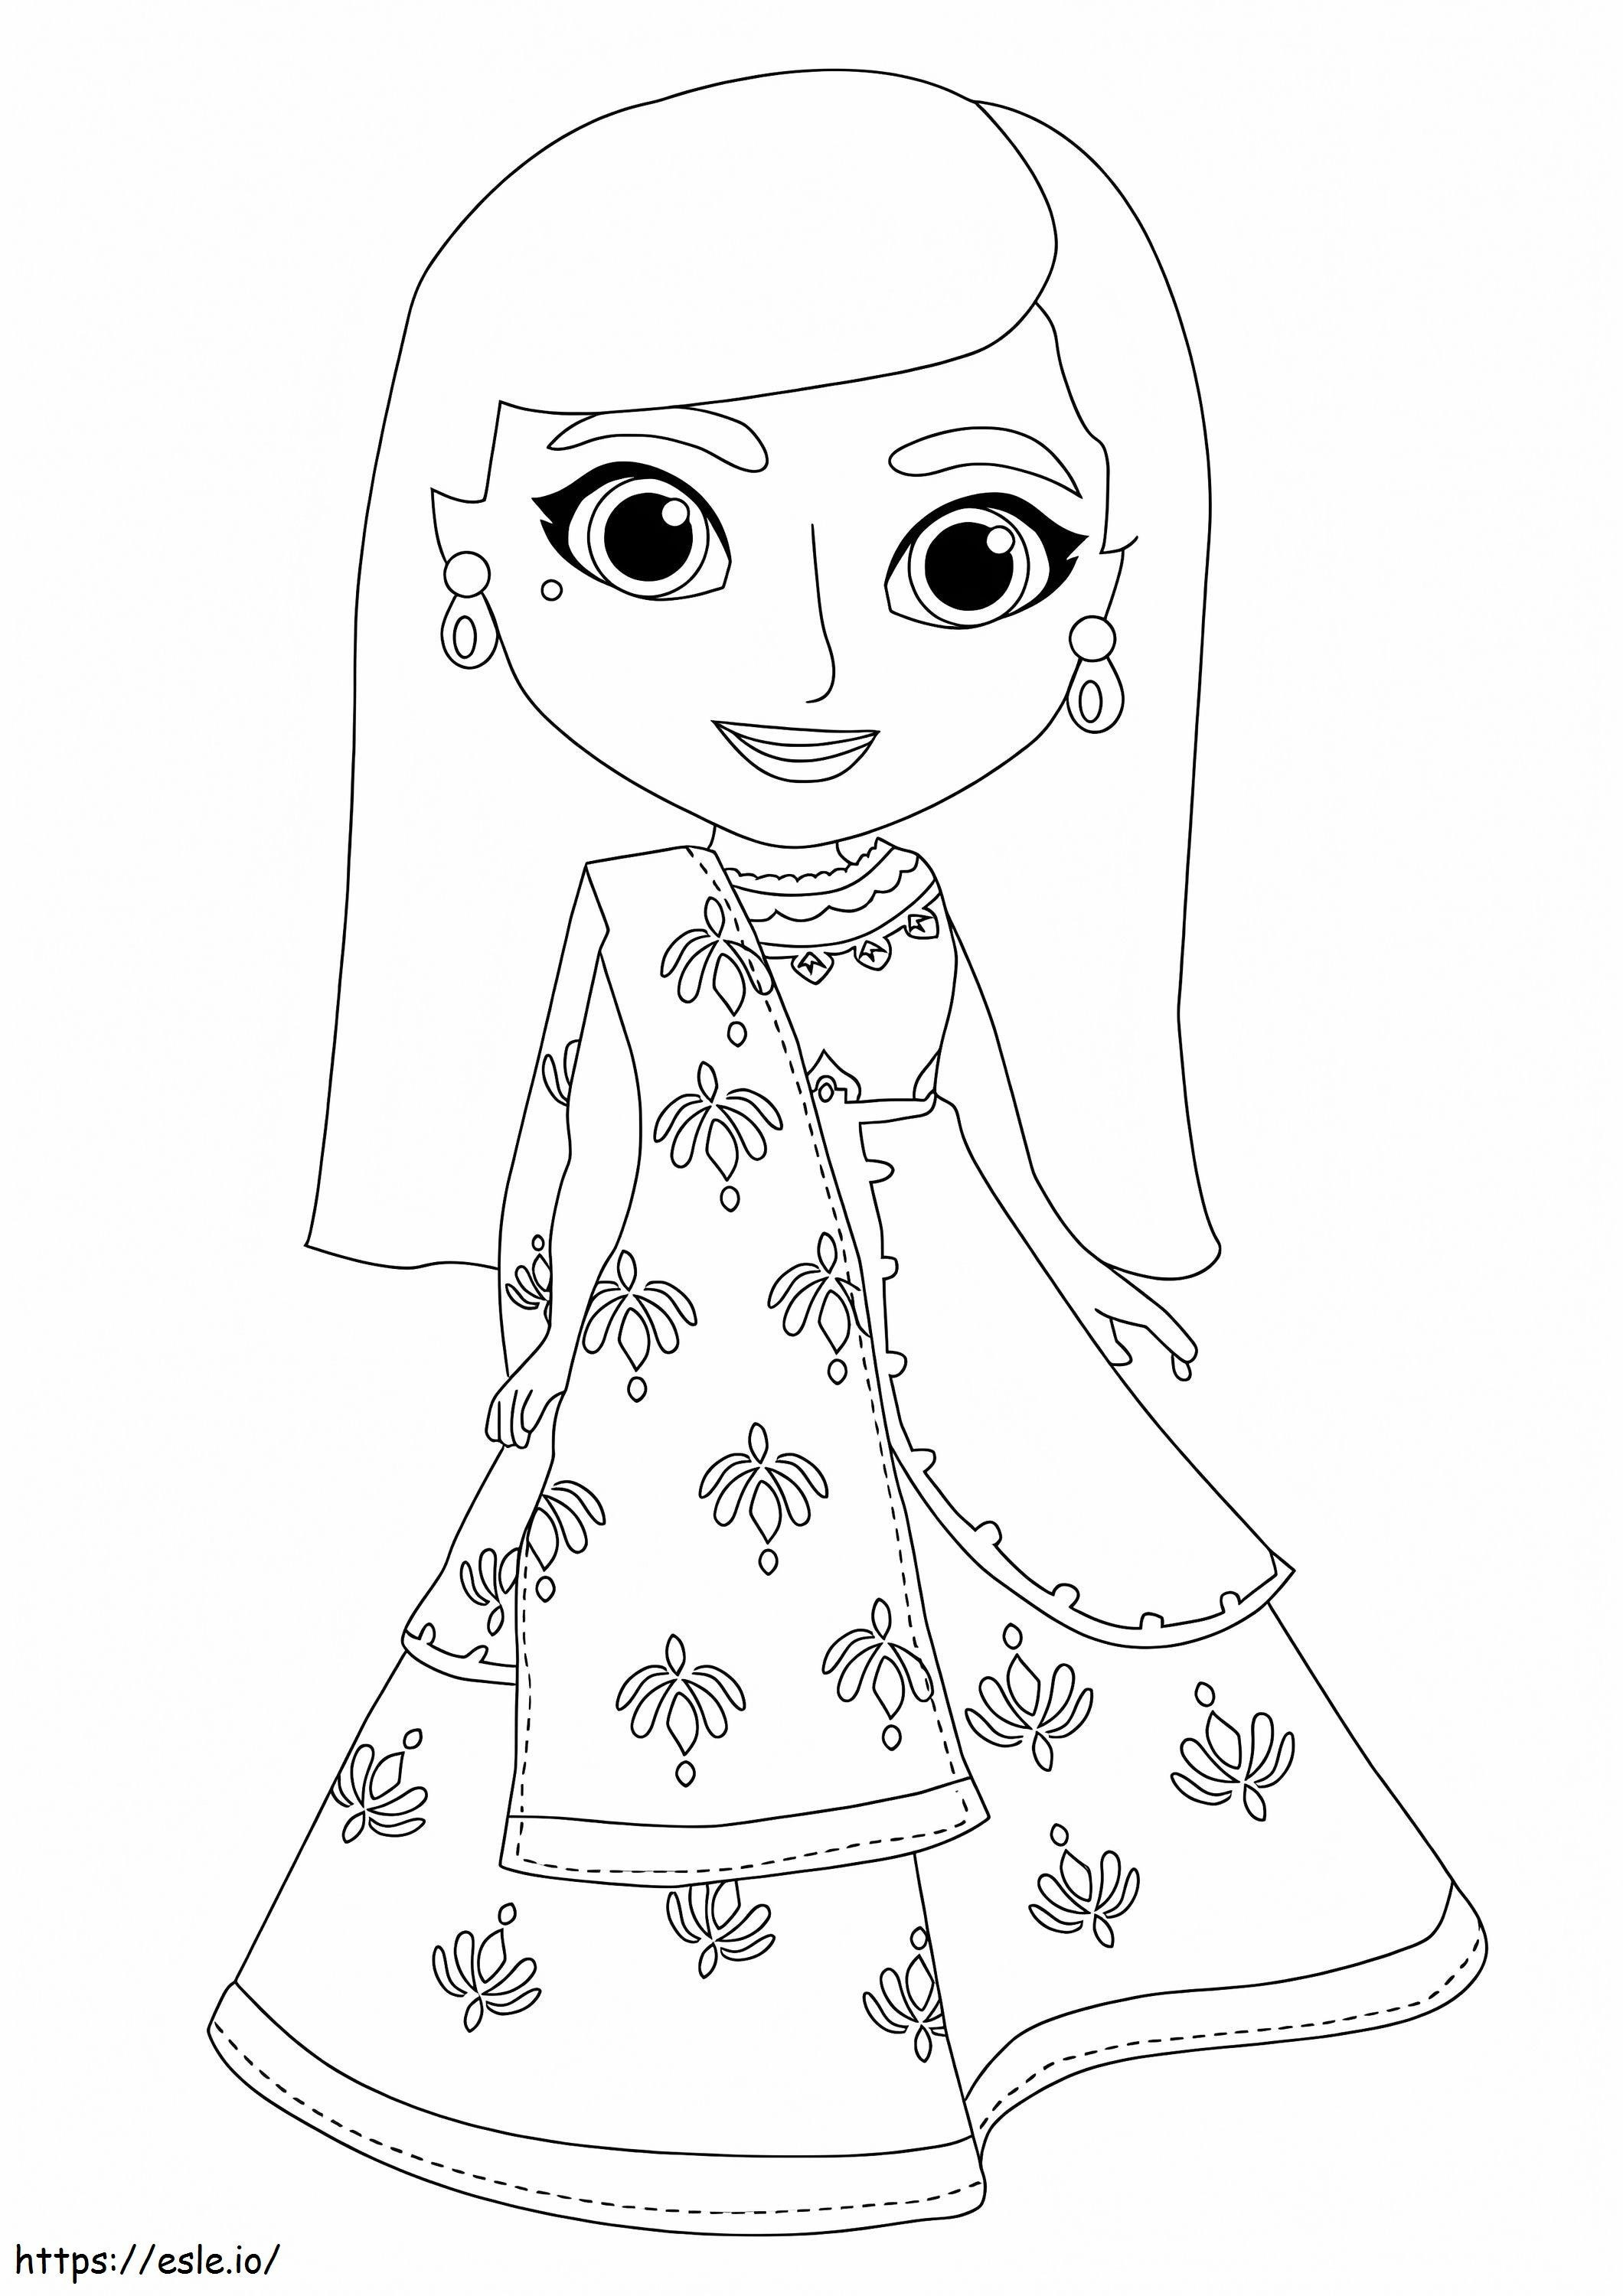 Cute Mira From Mira Royal Detective coloring page